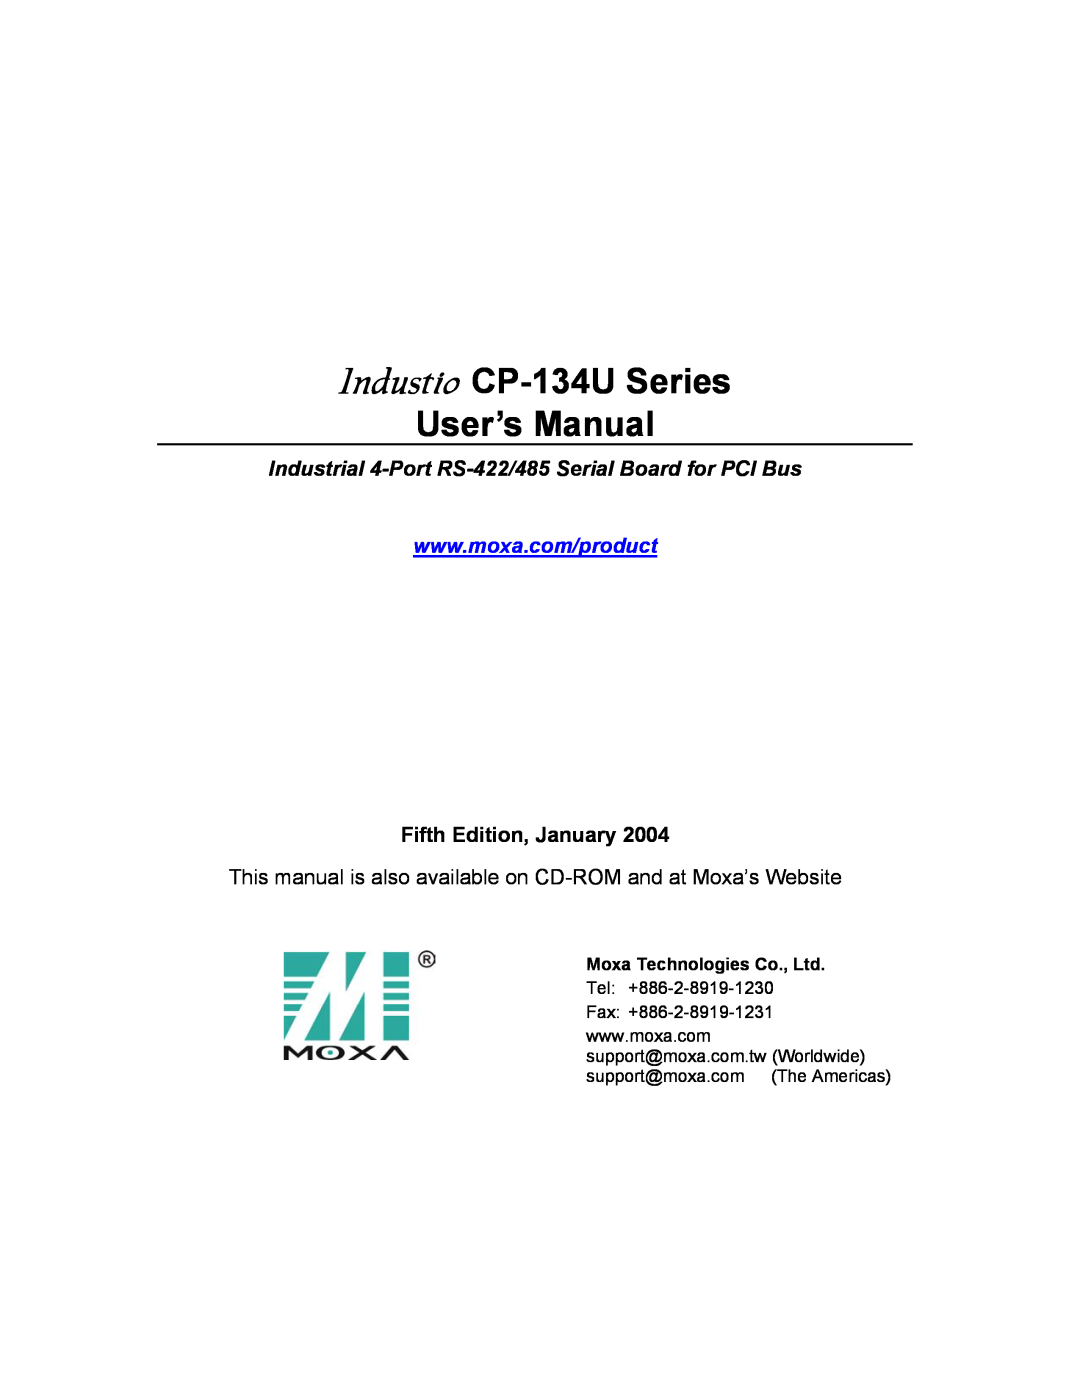 Moxa Technologies user manual Industio CP-134U Series User’s Manual, Fifth Edition, January 